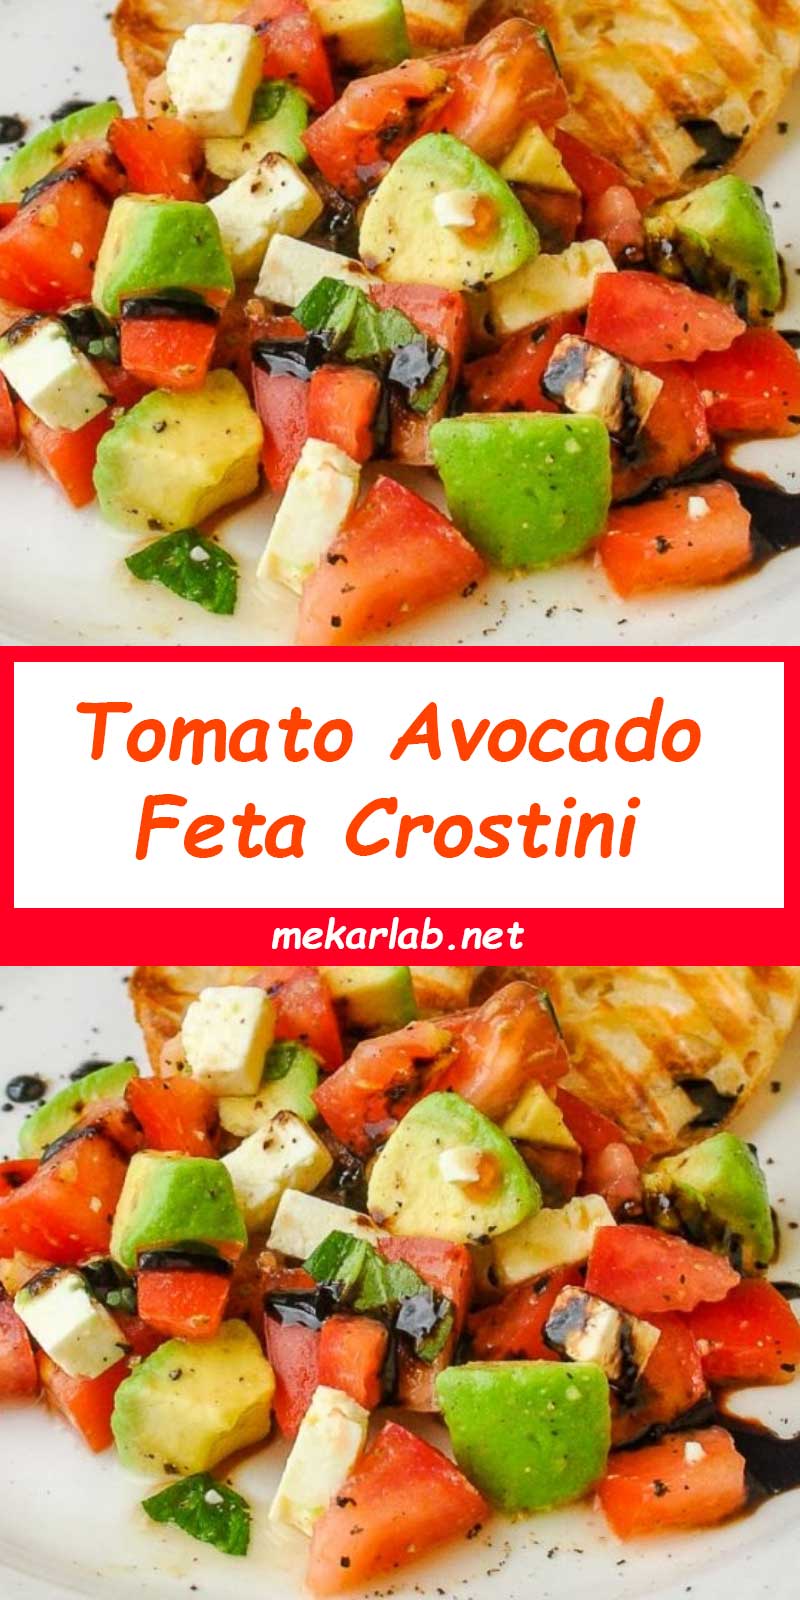 Tomato Avocado Feta Crostini